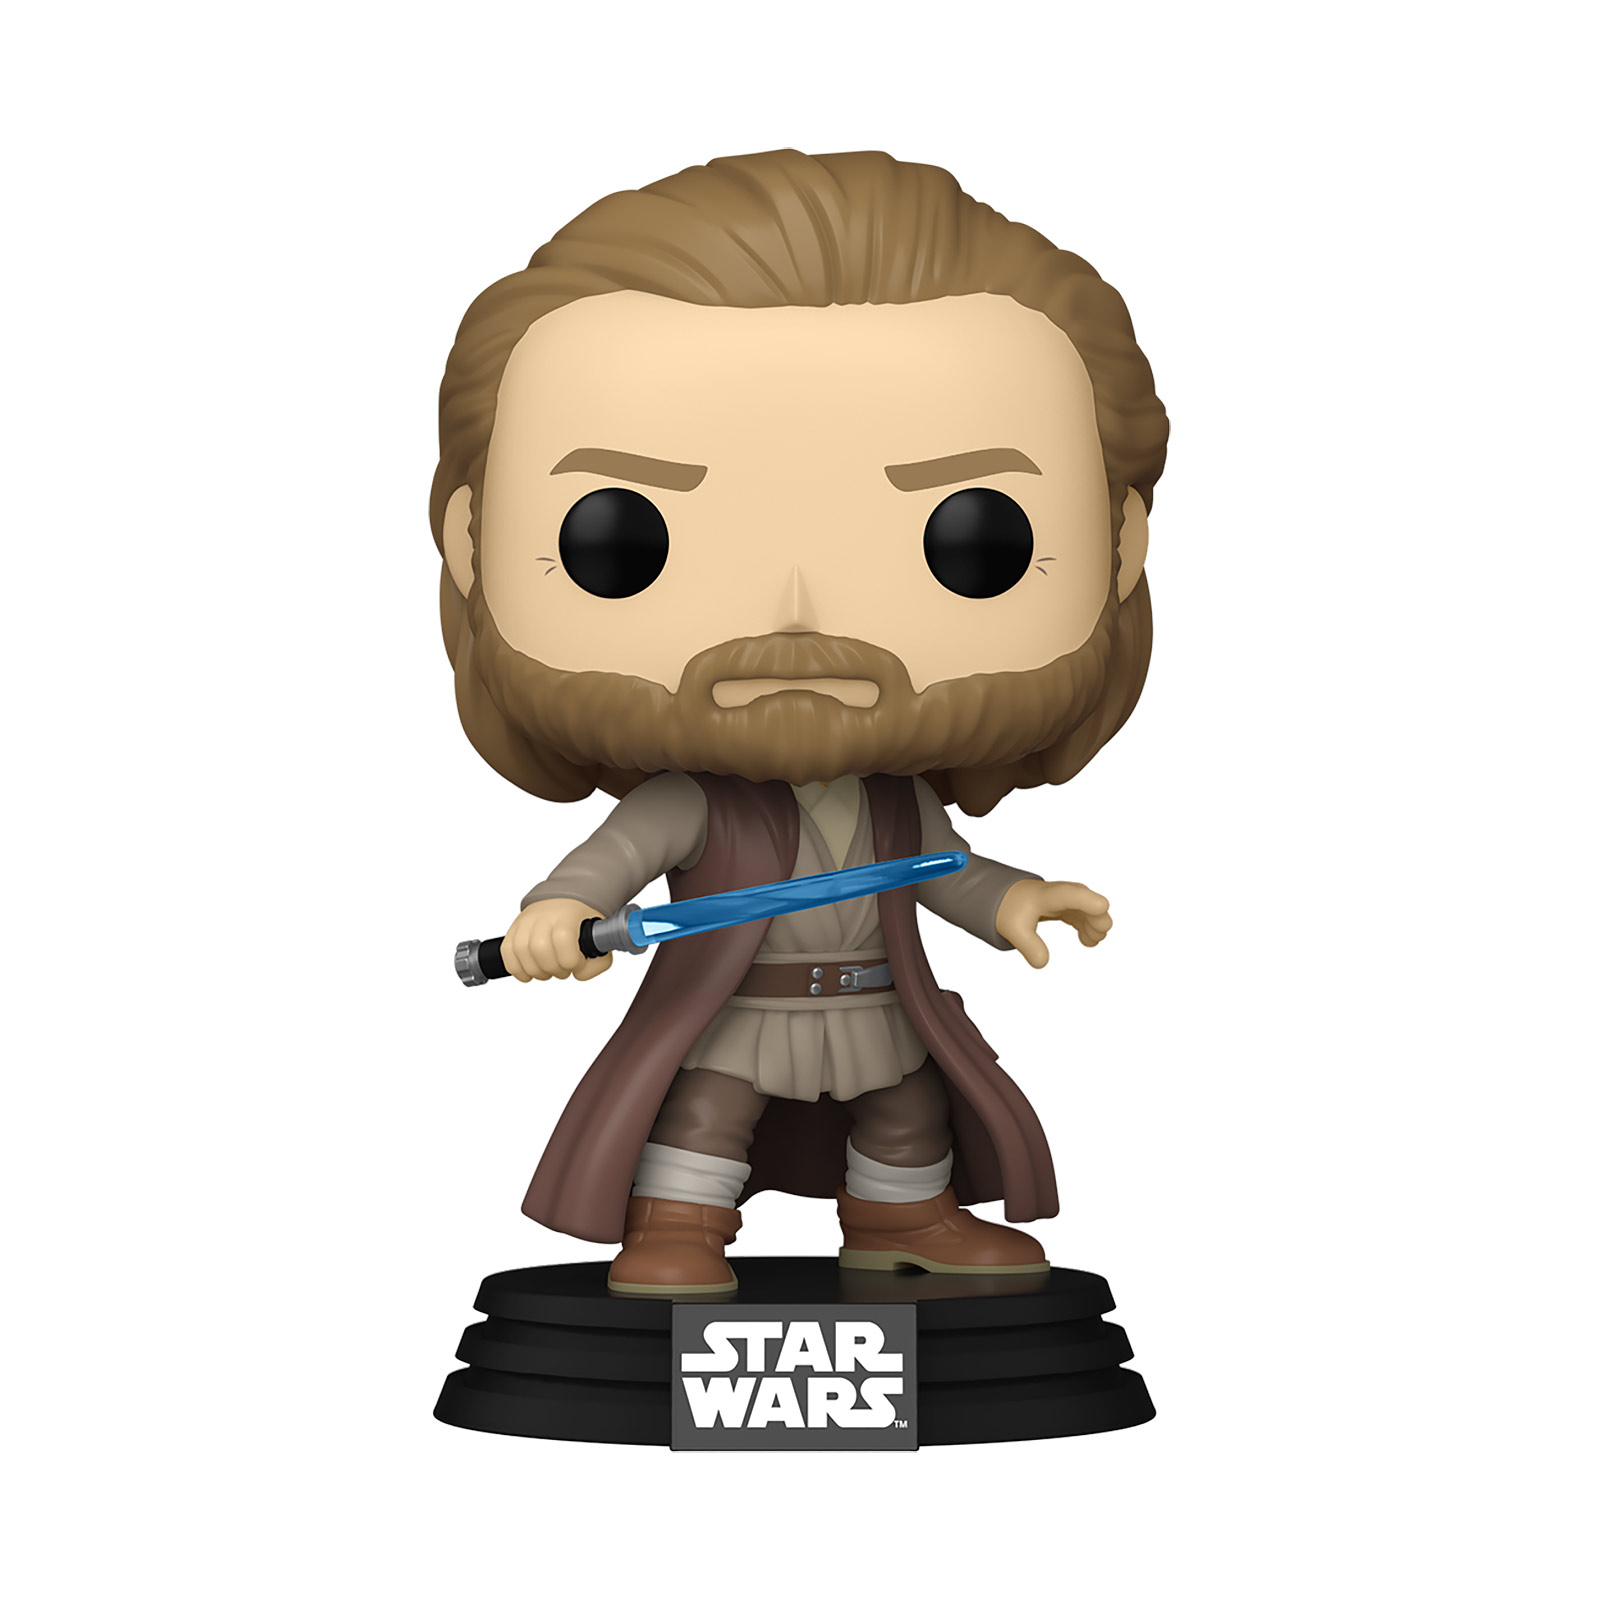 Obi-Wan Battle Funko Pop Bobblehead Figure - Star Wars Obi-Wan Kenobi